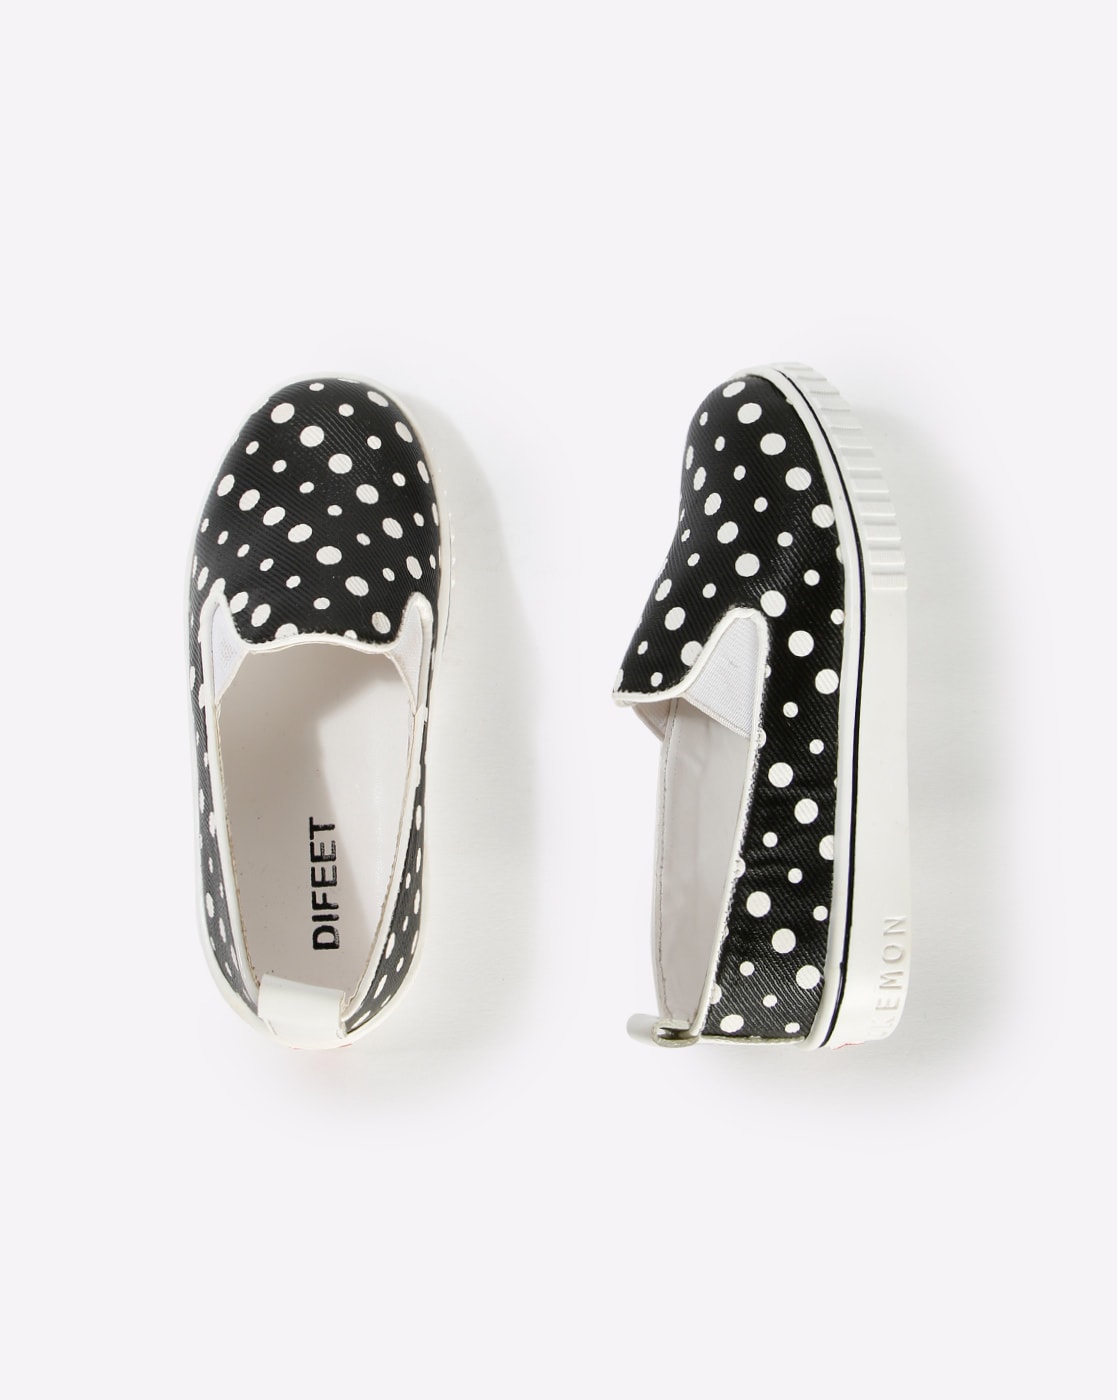 black polka dot shoes